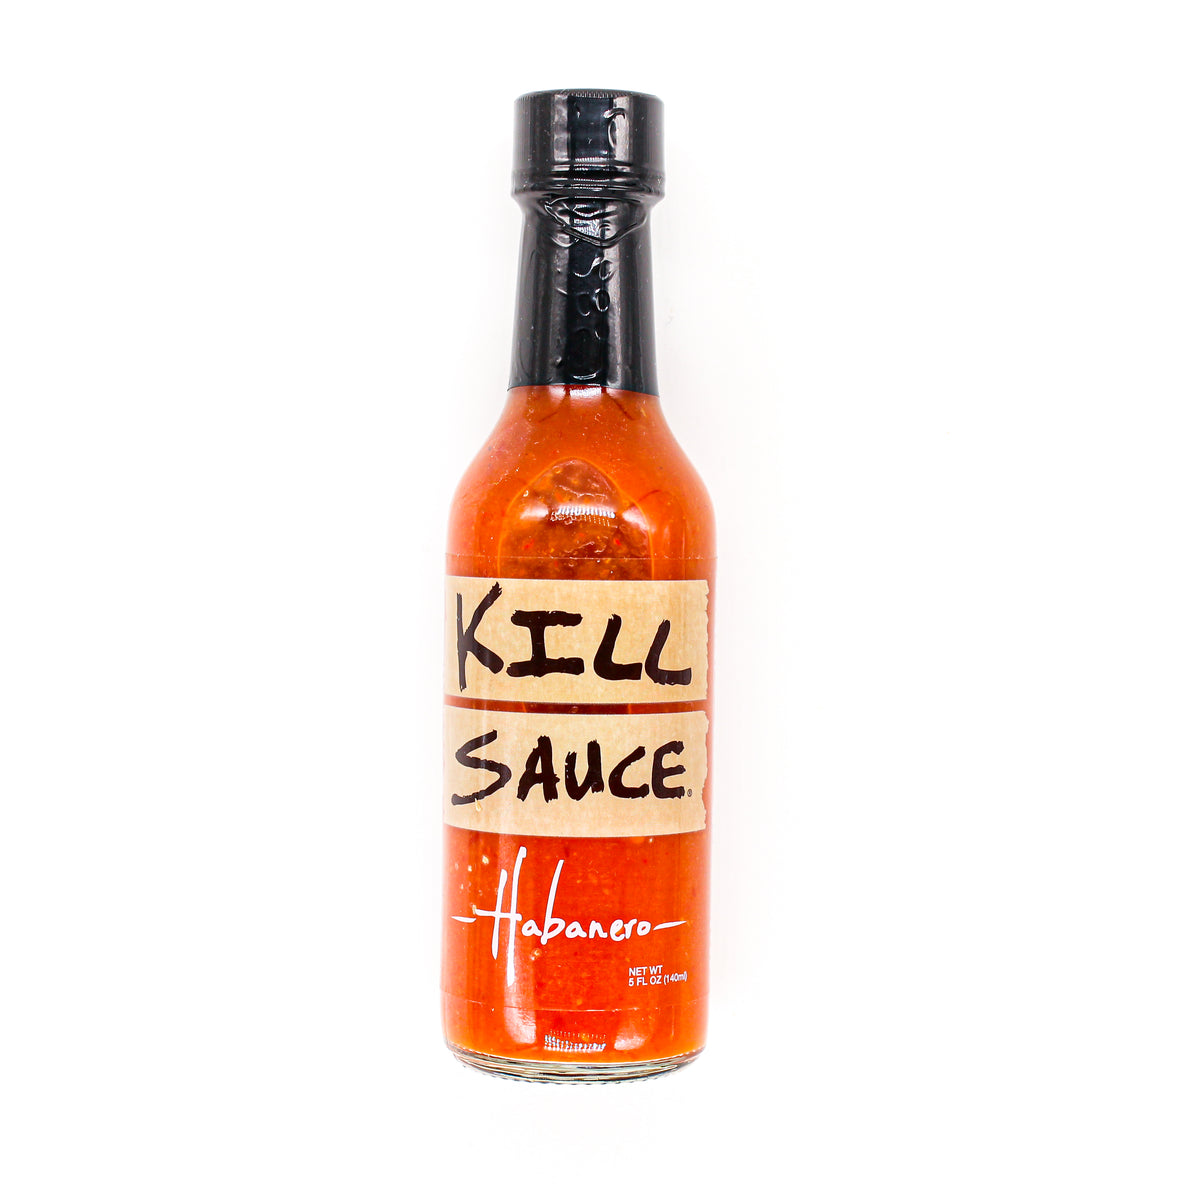 Kill Sauce Habanero